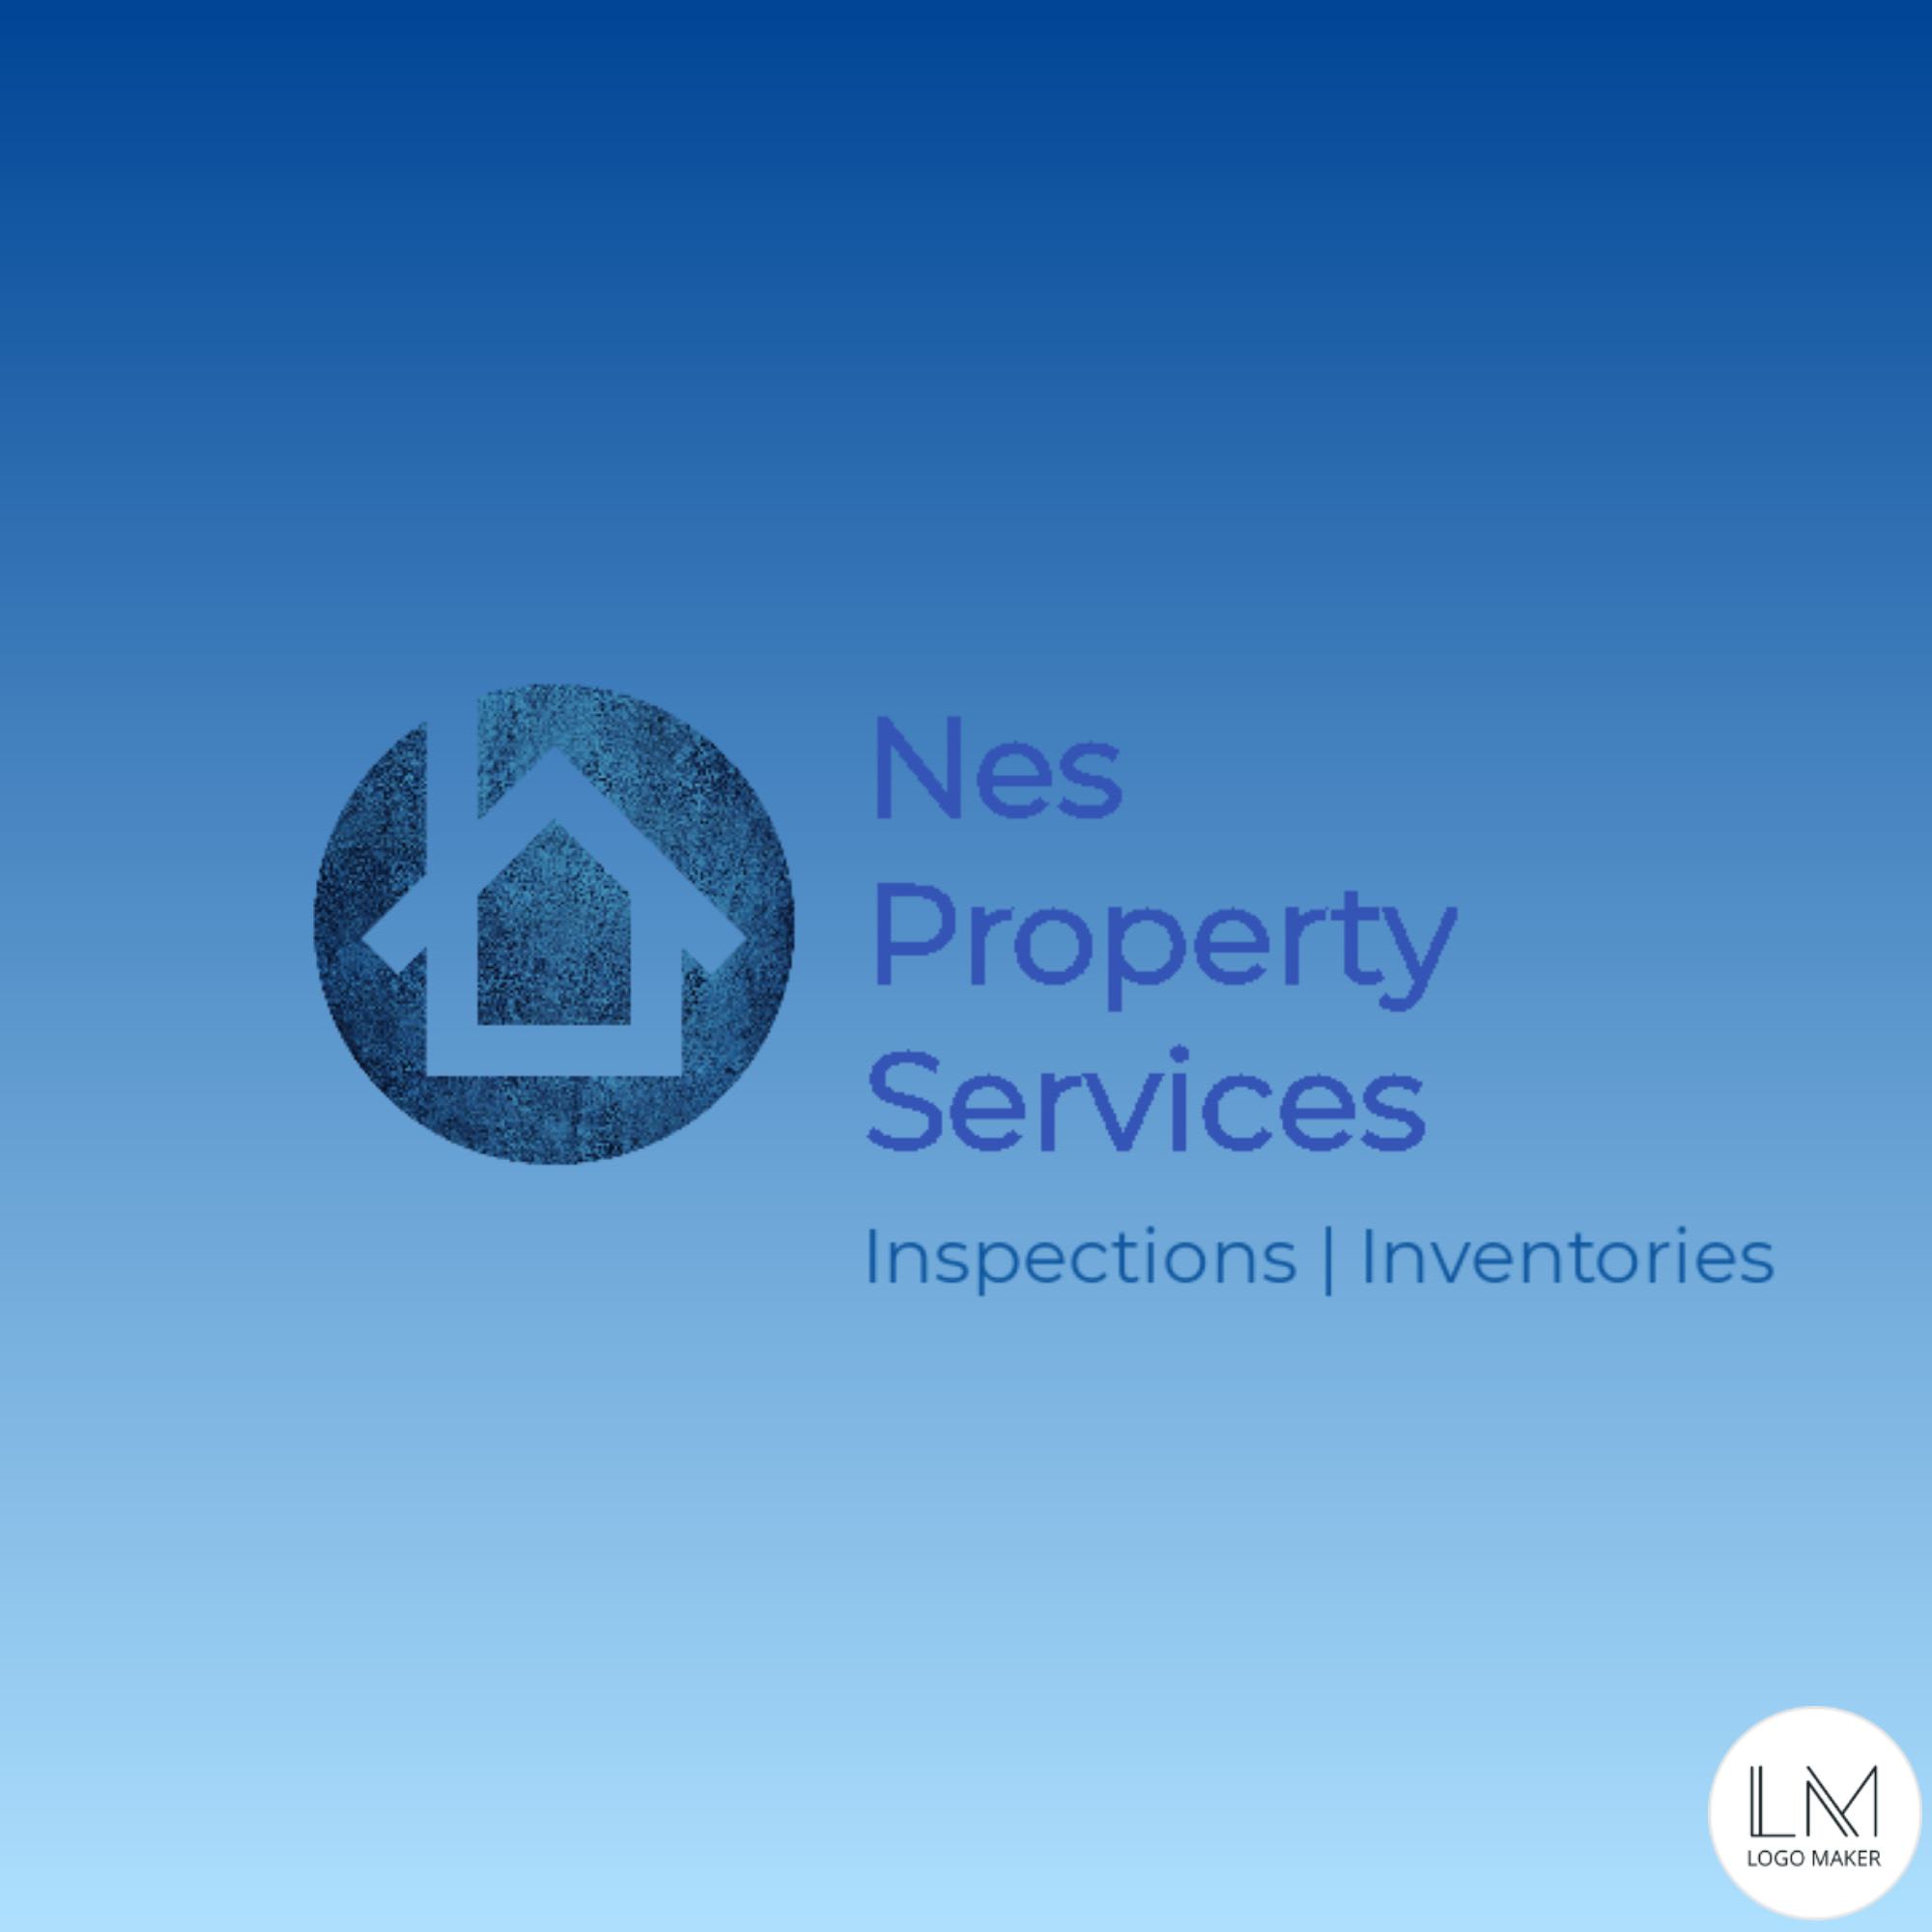 Nes Property Services